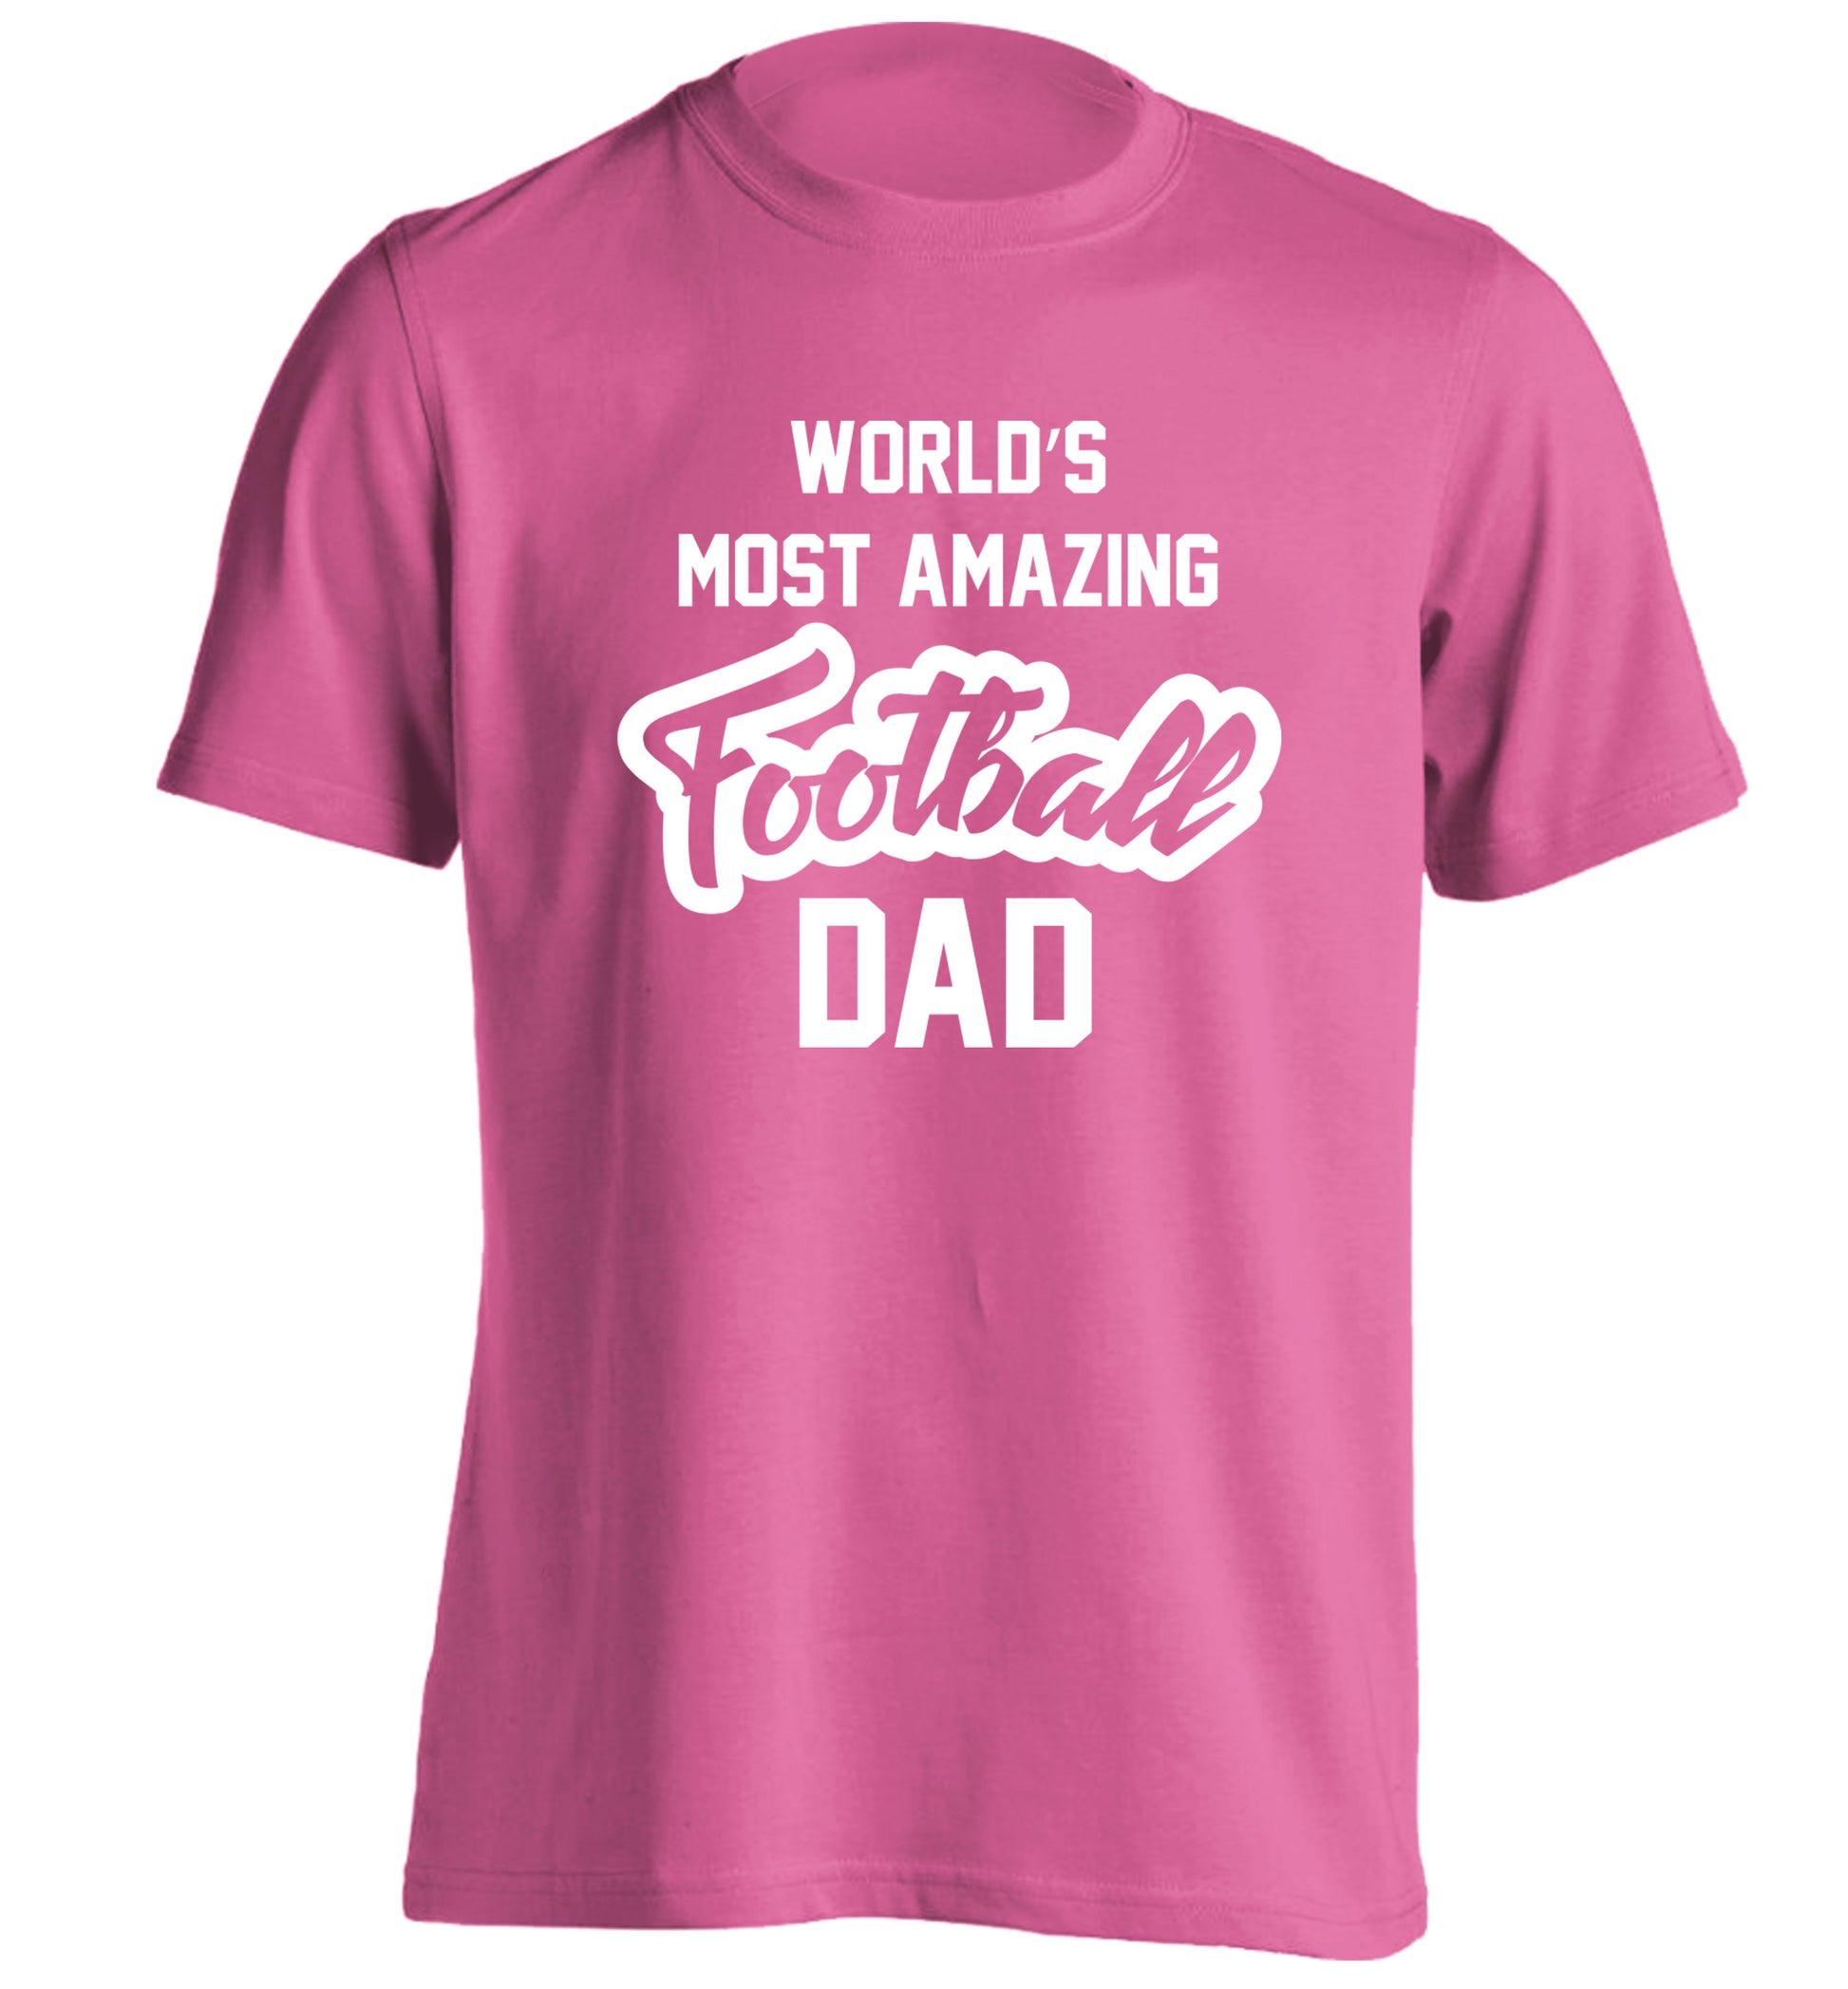 Worlds most amazing football dad adults unisexpink Tshirt 2XL